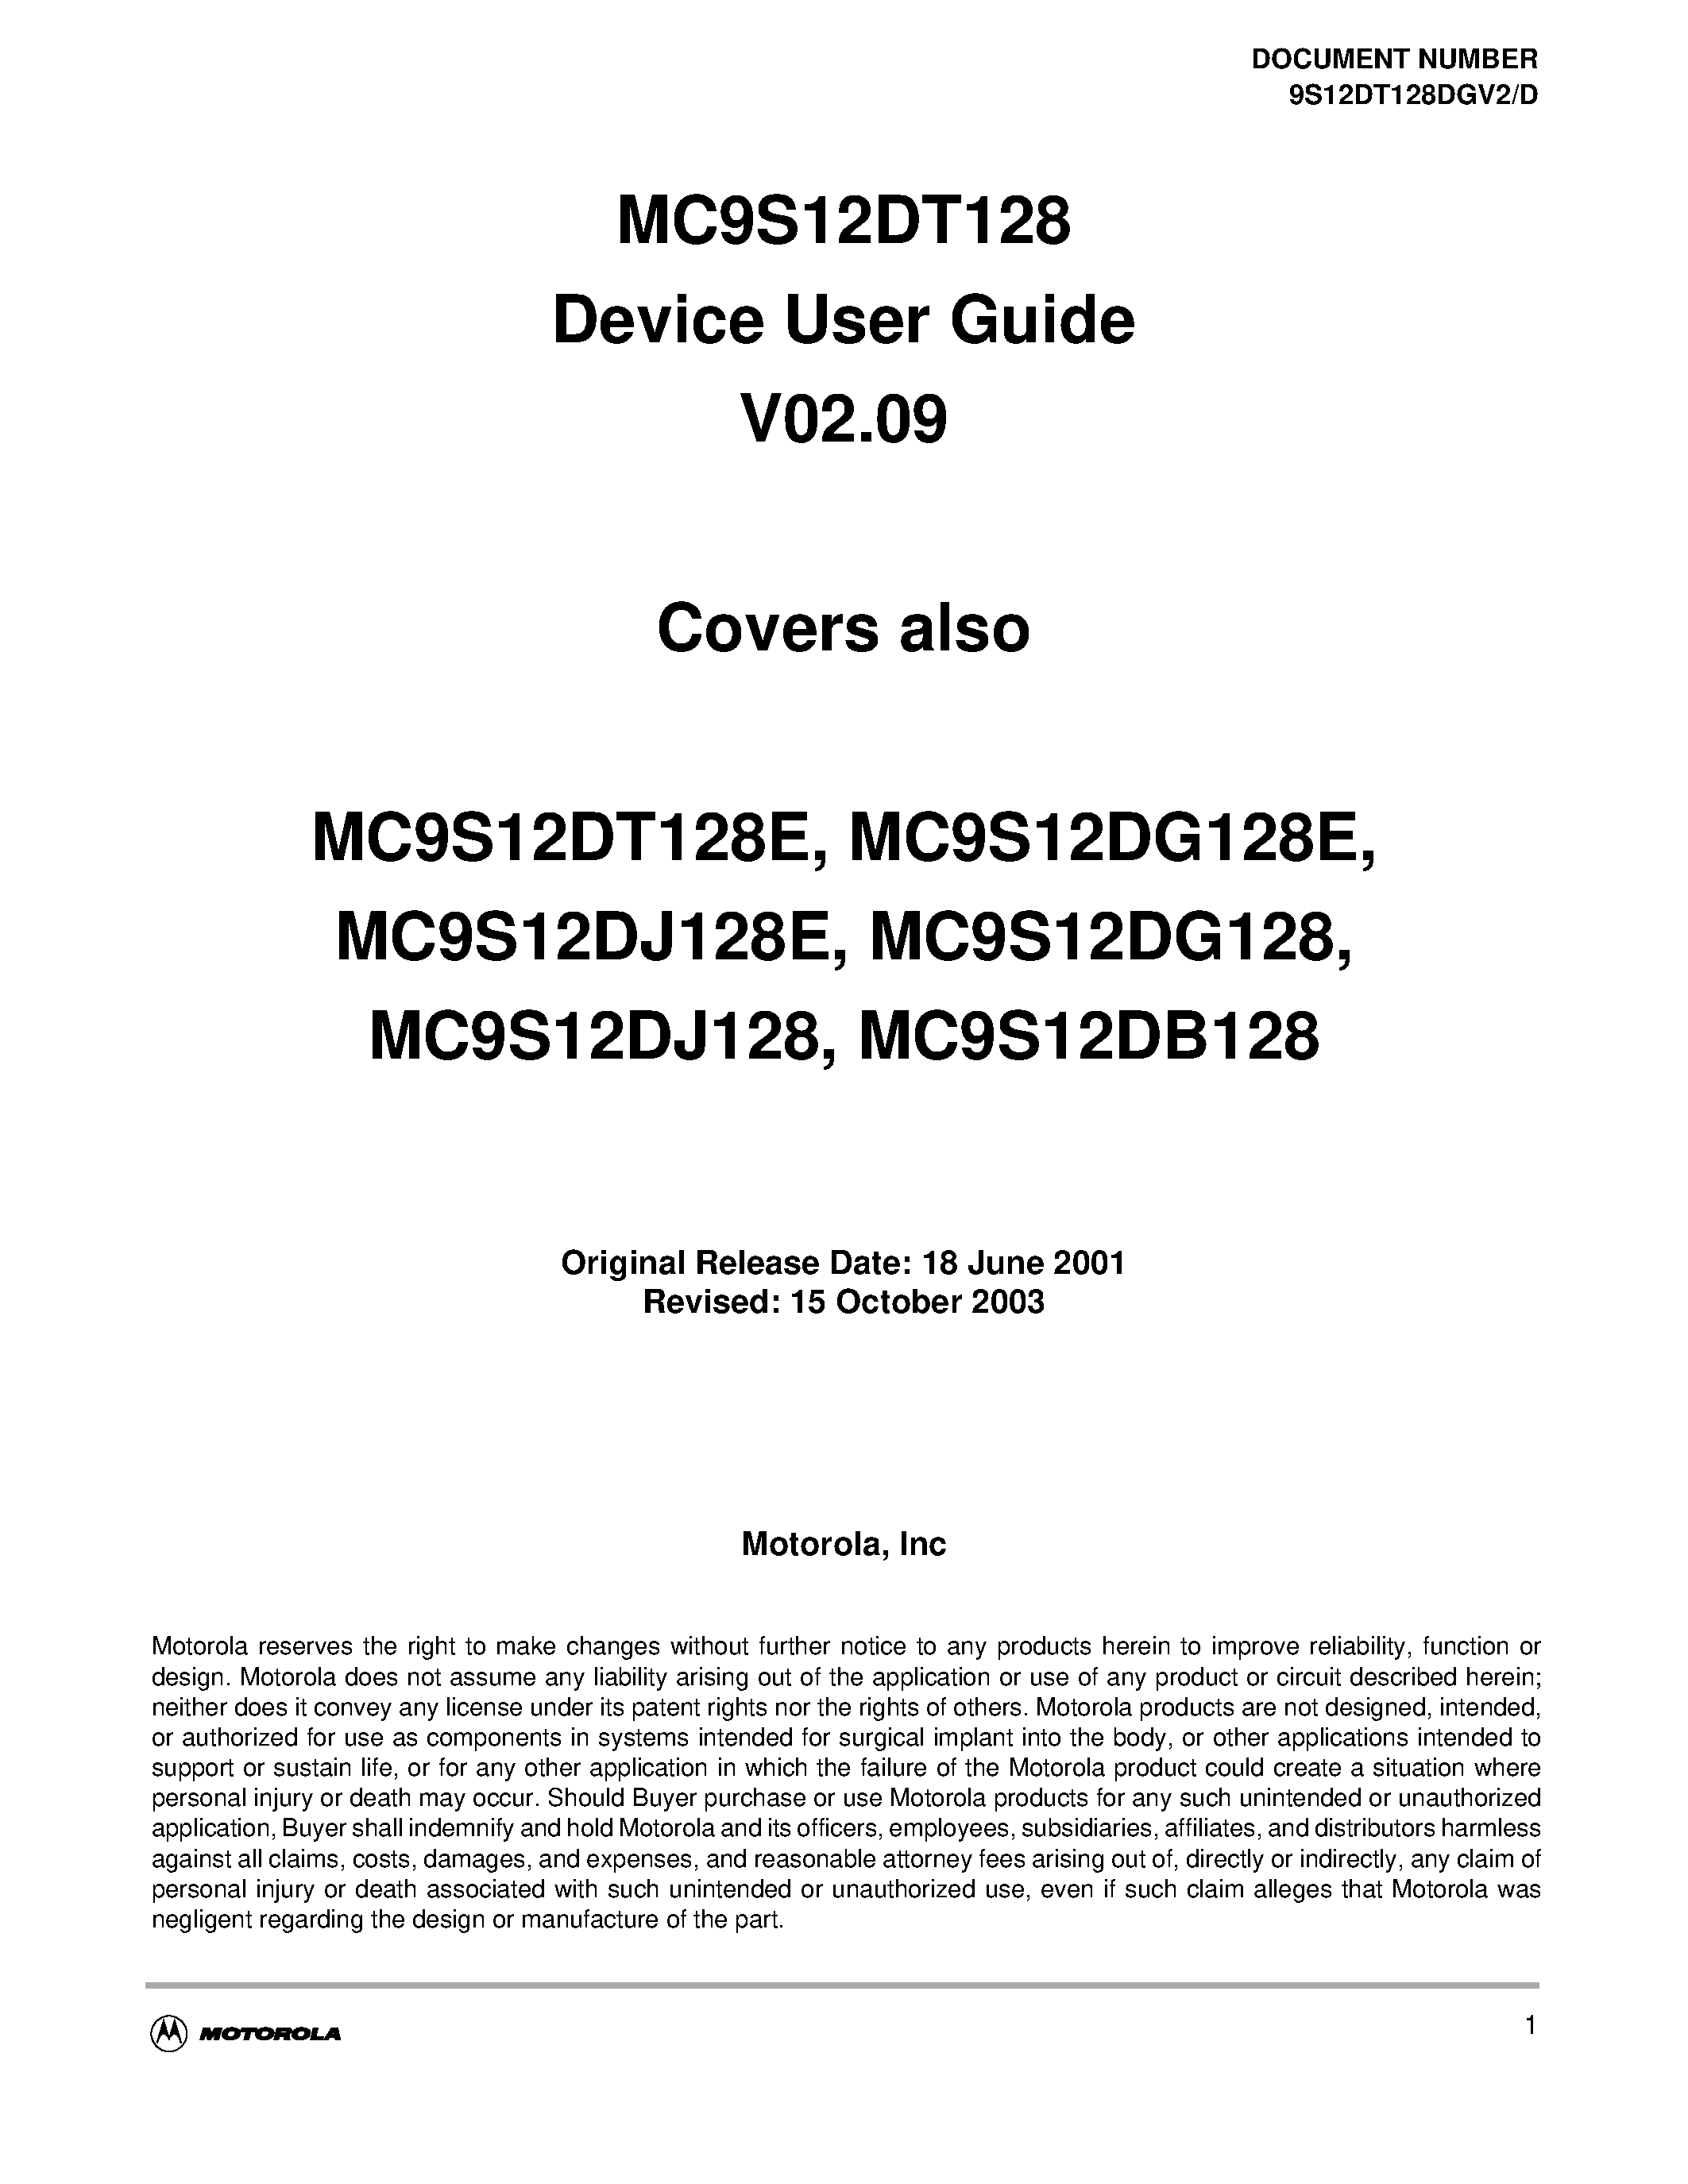 Datasheet S12OSCV2D - MC9S12DT128 Device User Guide V02.09 page 1